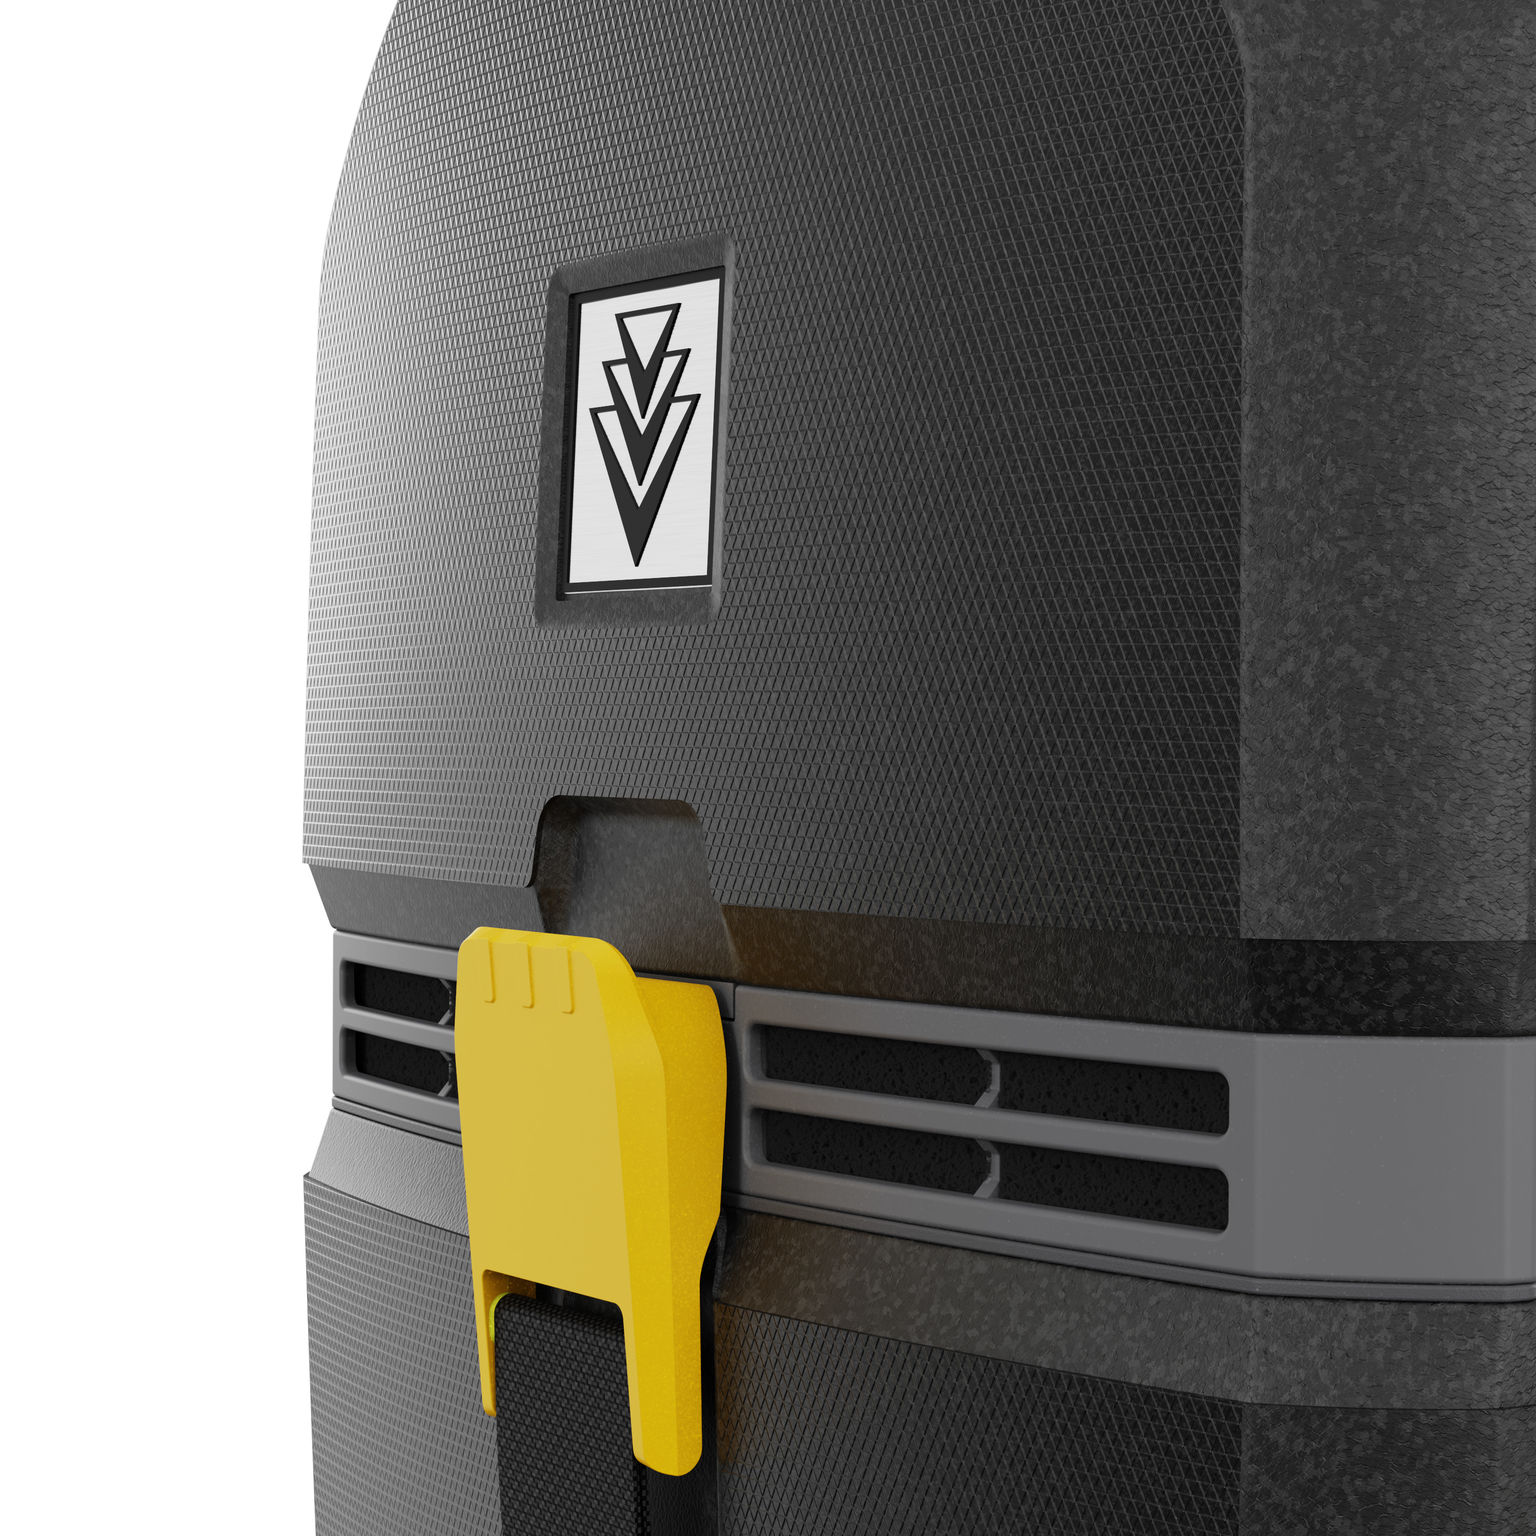 Backpack Vacuum Cleaner Light (BVL 5/1 Bp)